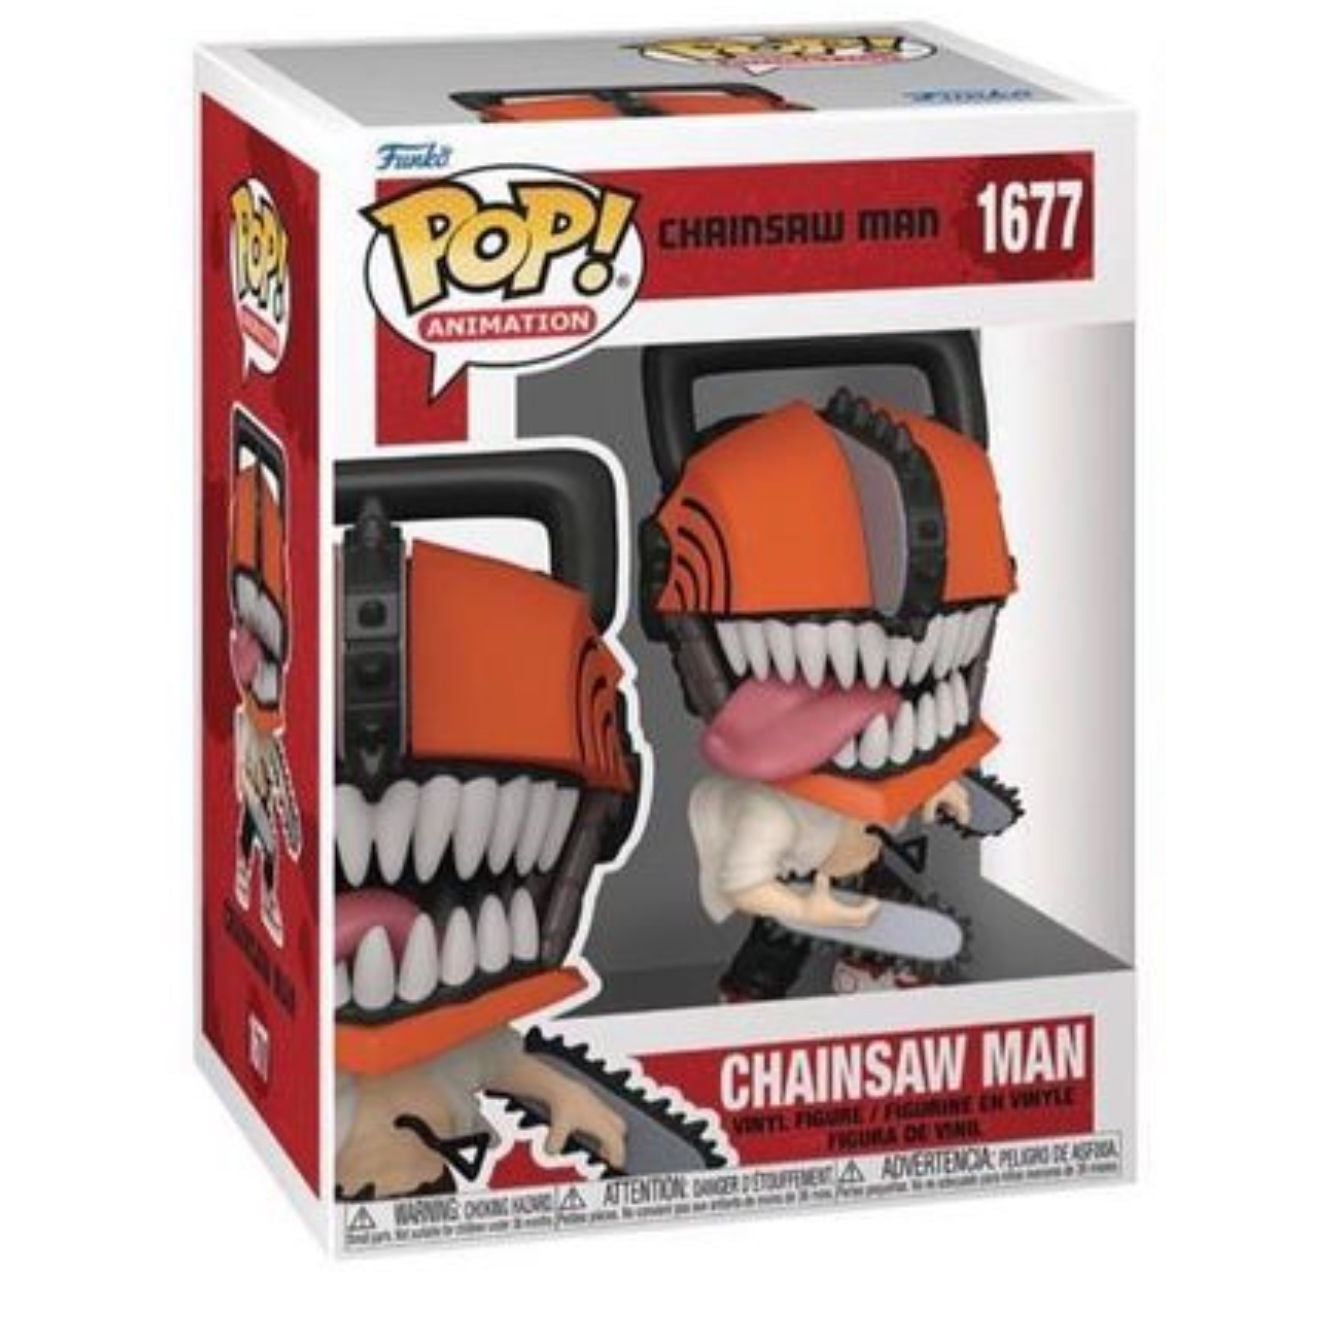 ""PRE-ORDER"" Funko POP! Chainsaw Man: Chainsaw Man